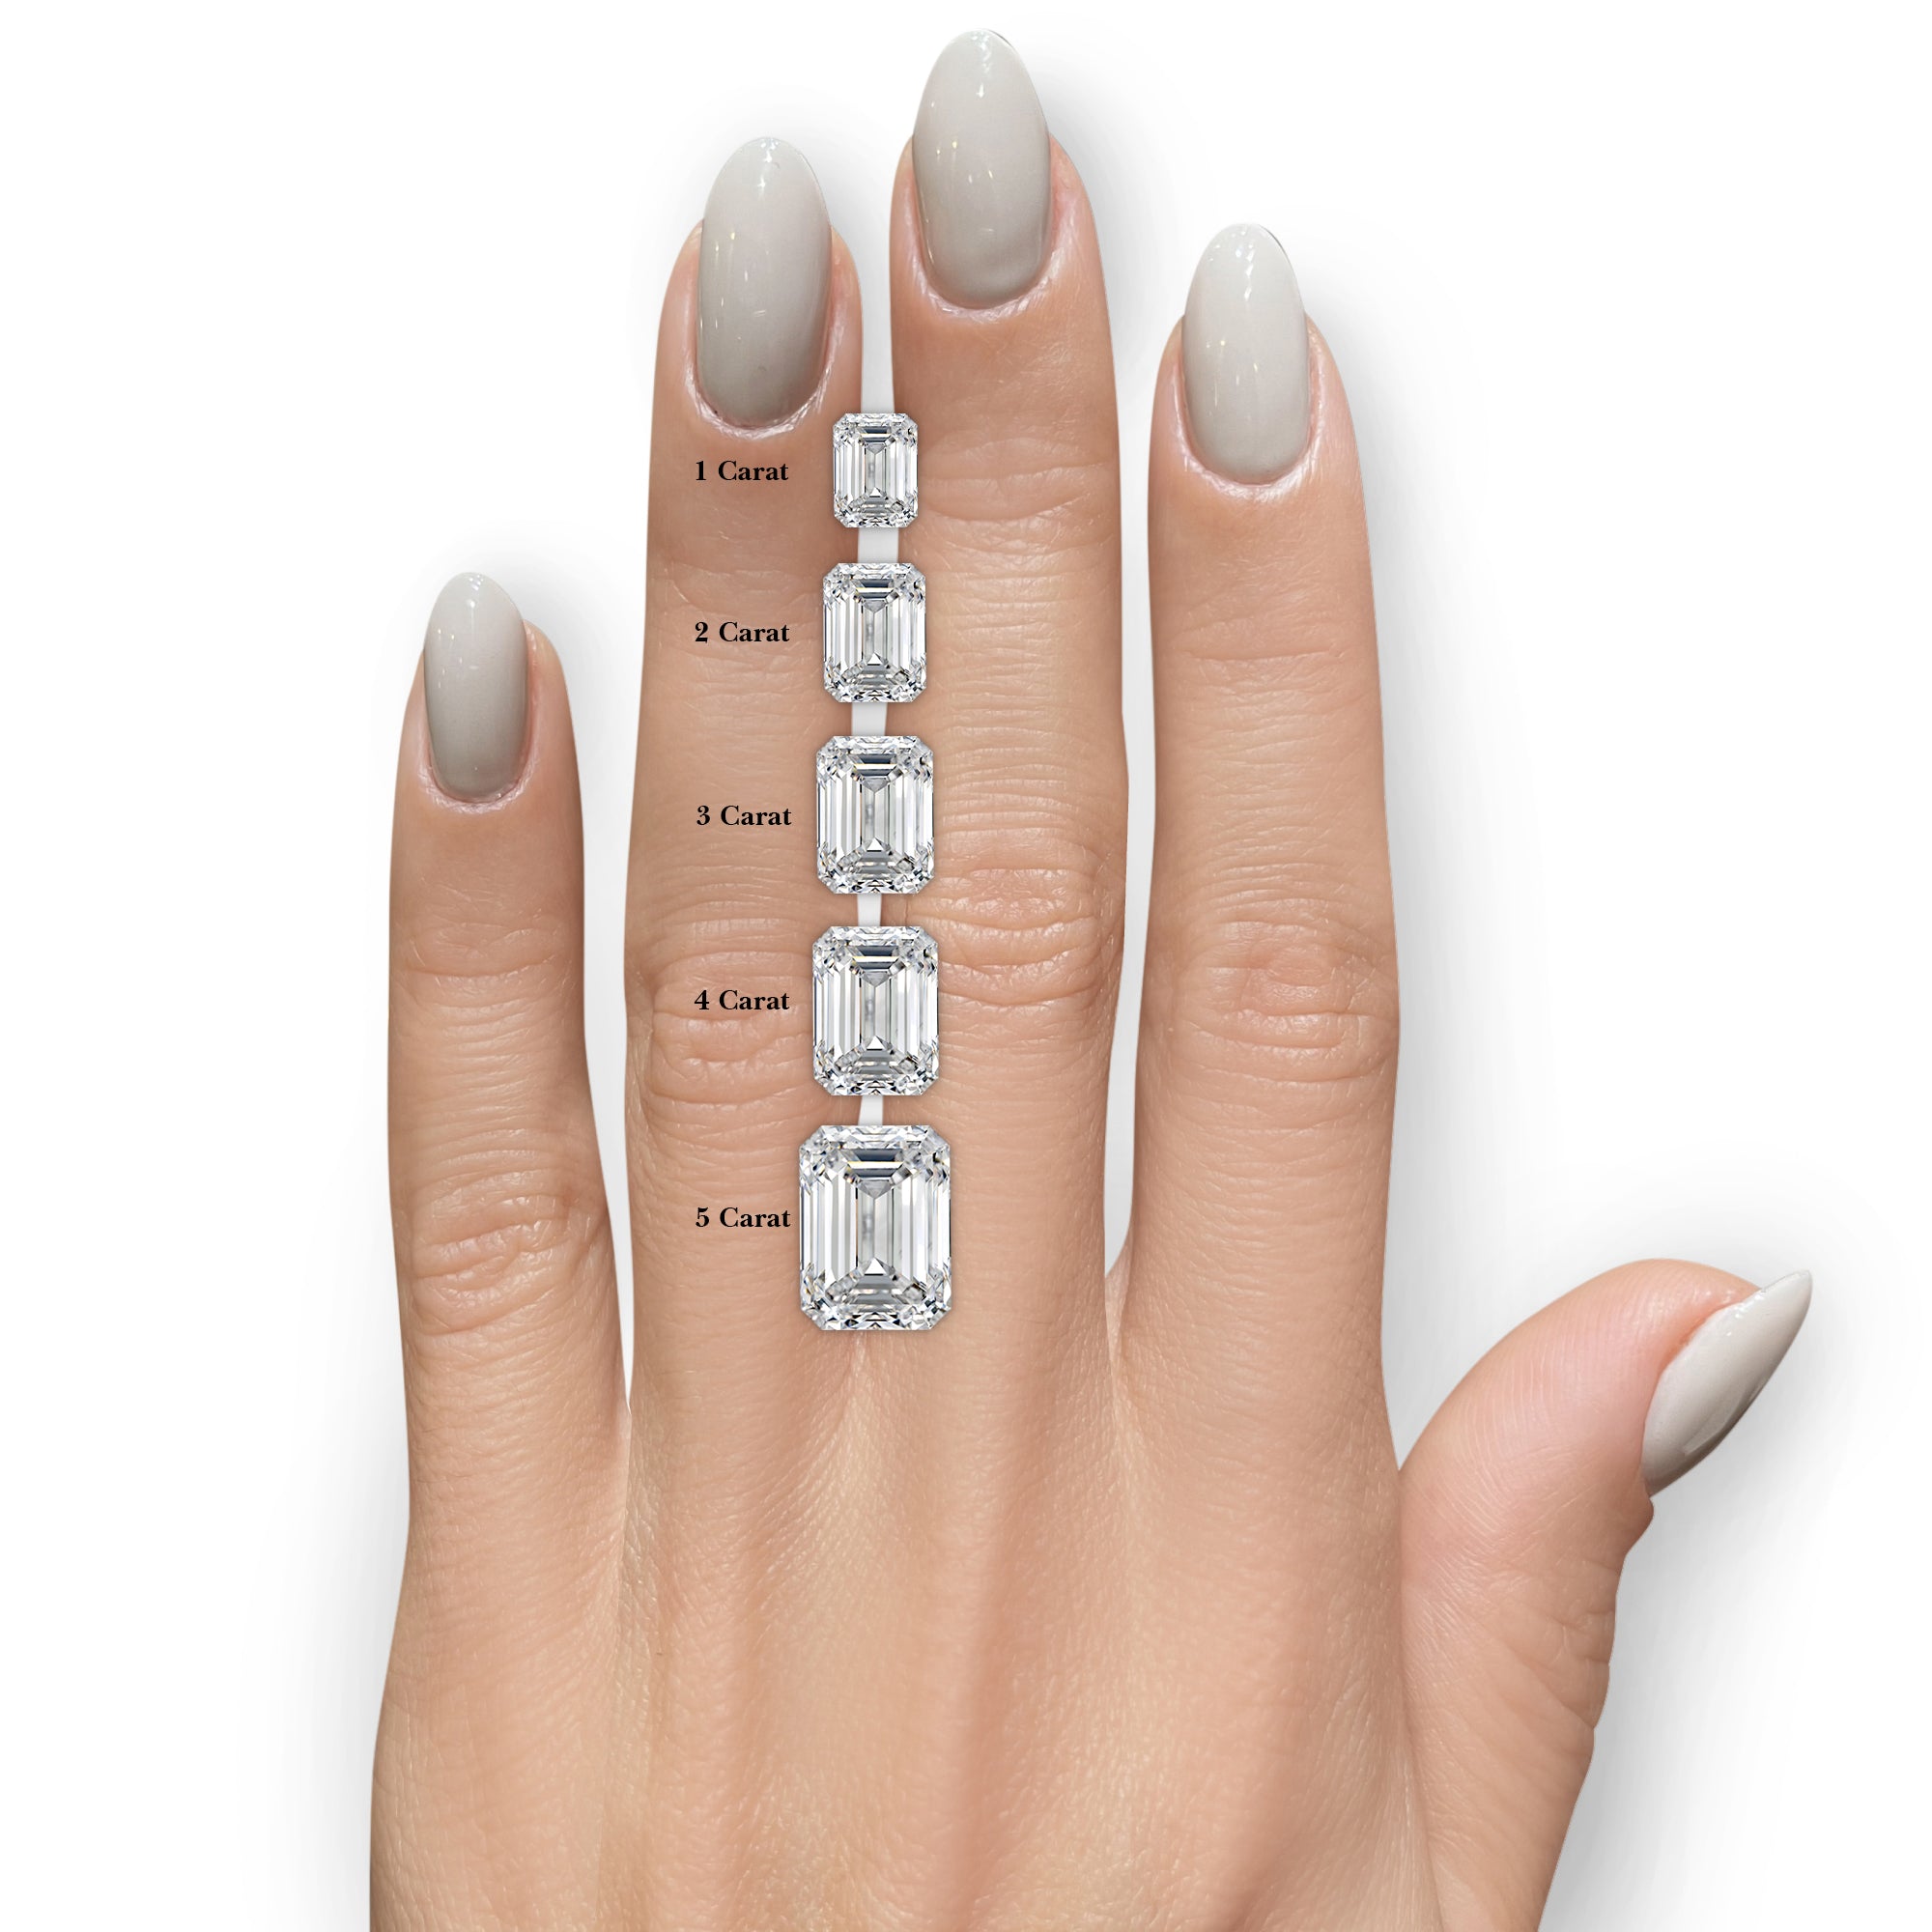 Claire Moissanite & Diamonds Ring -14K White Gold